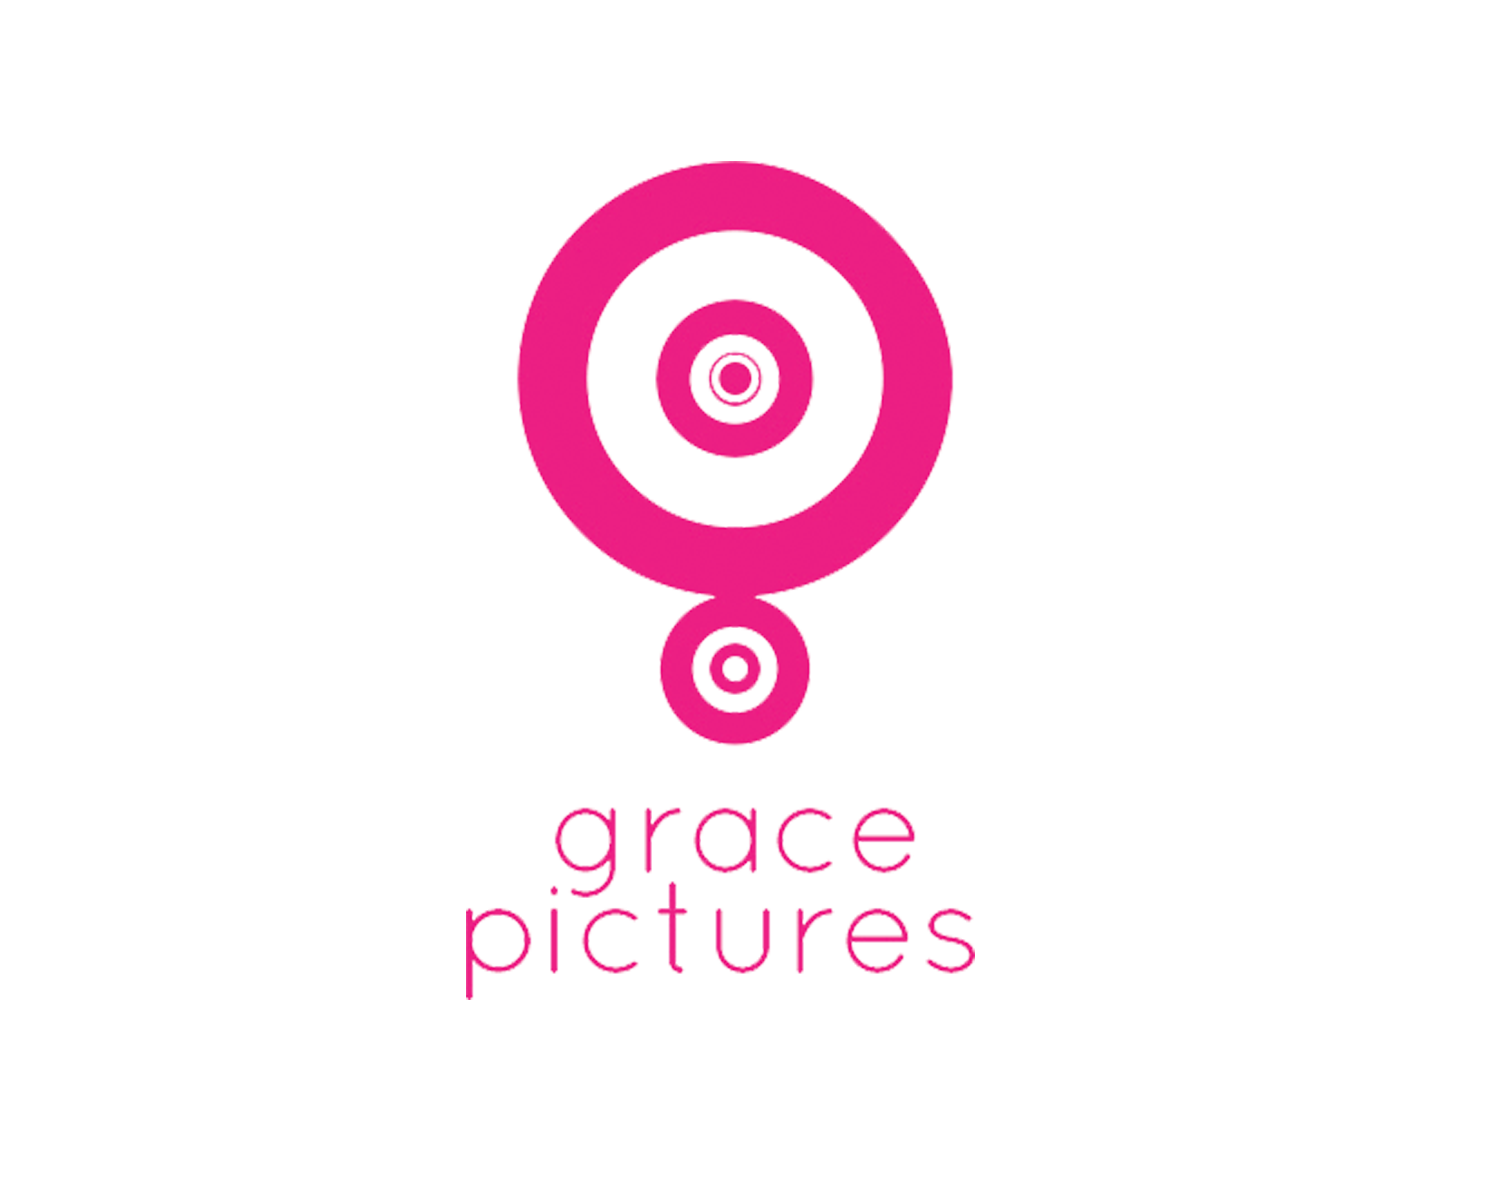 Grace Pictures